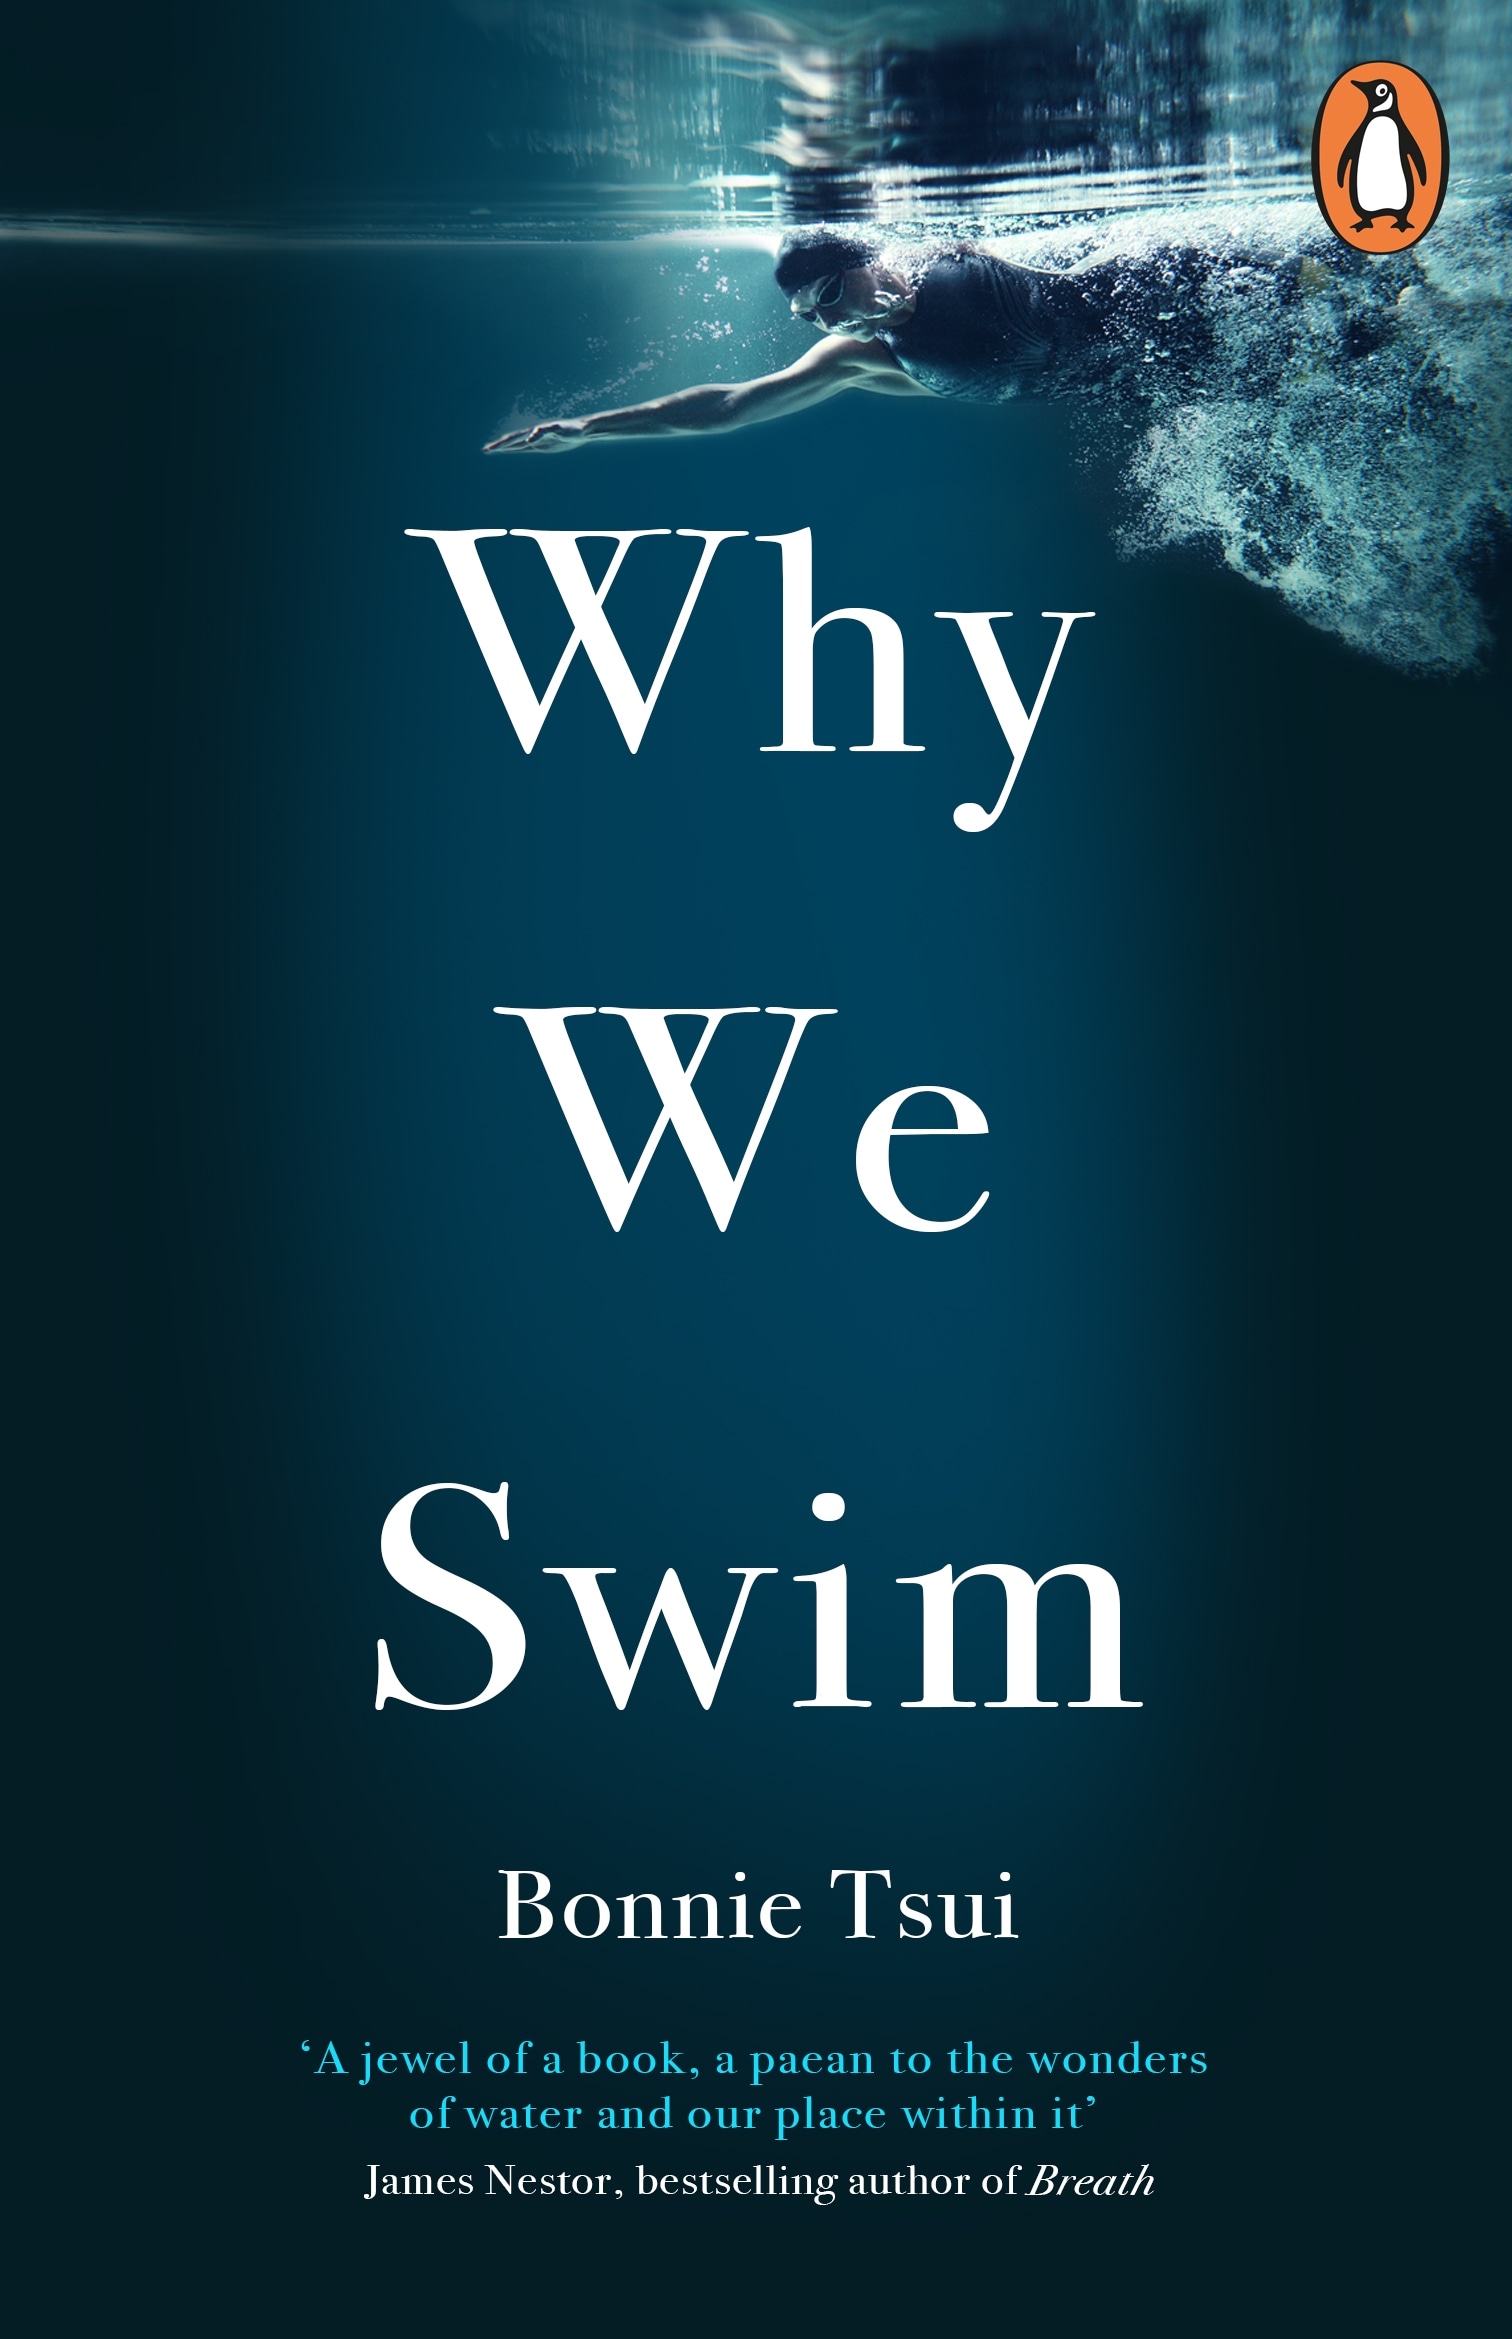 Book “Why We Swim” by Bonnie Tsui — August 5, 2021